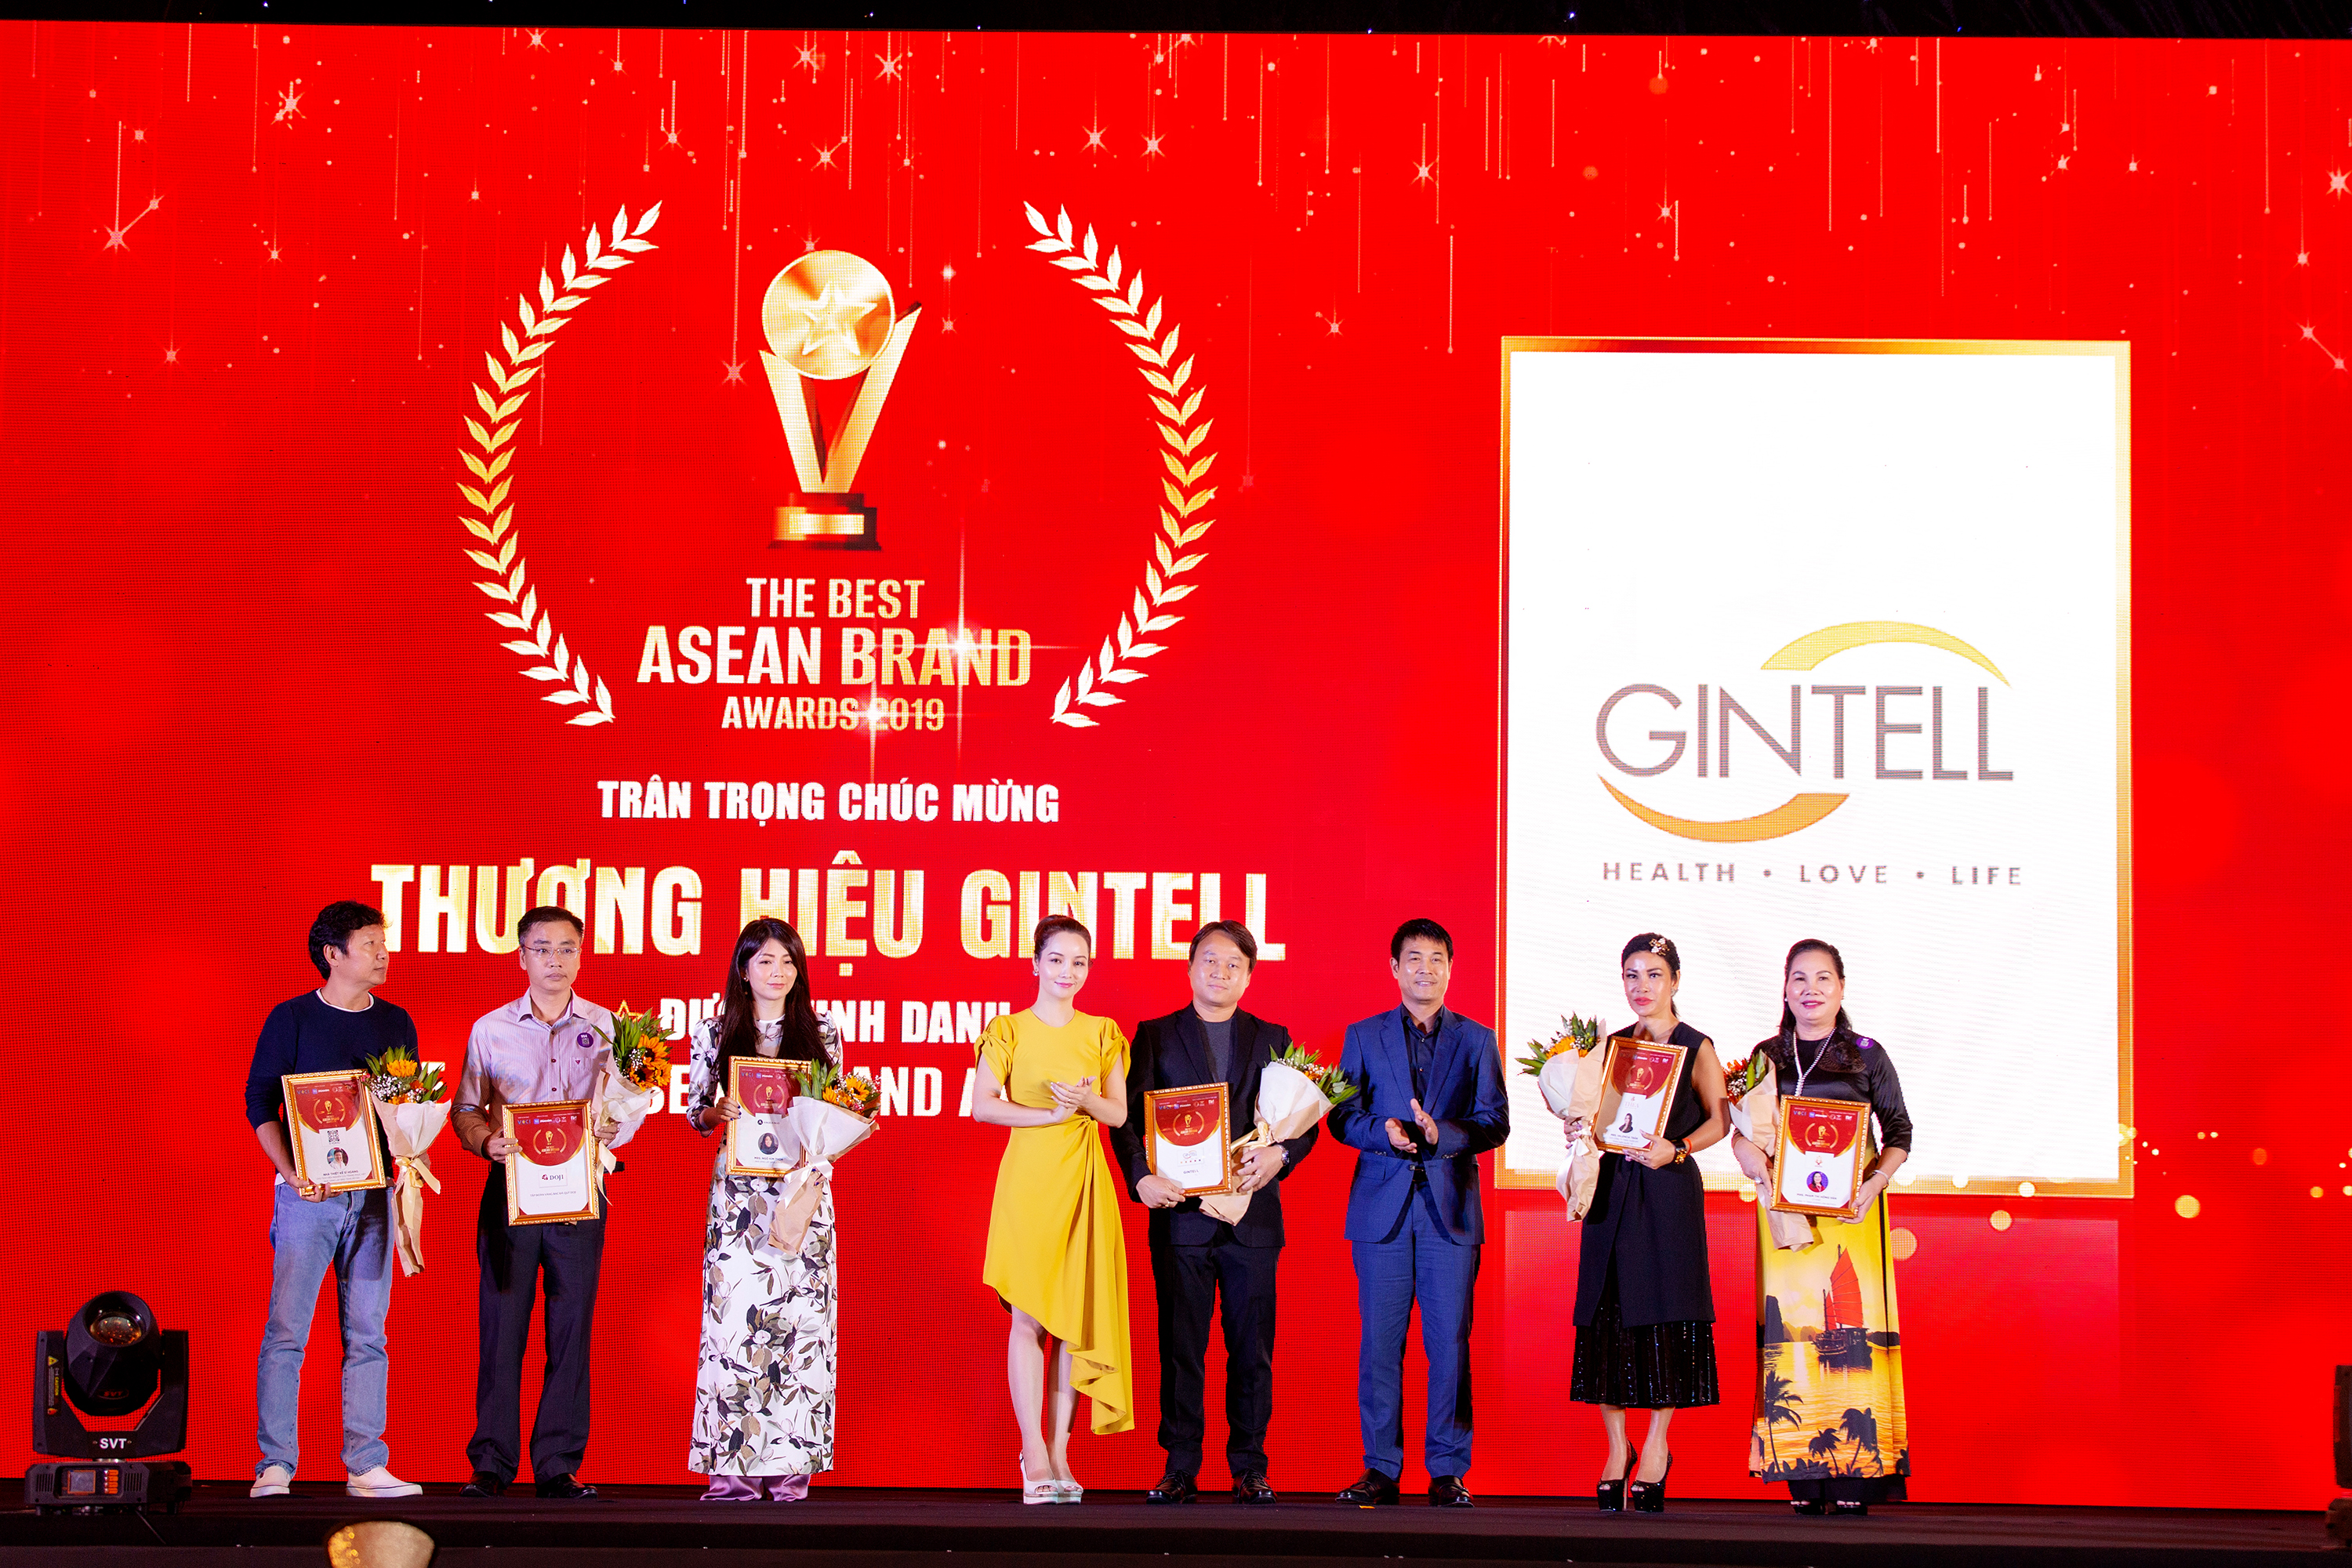 The Best Asean Brand Awards 2019